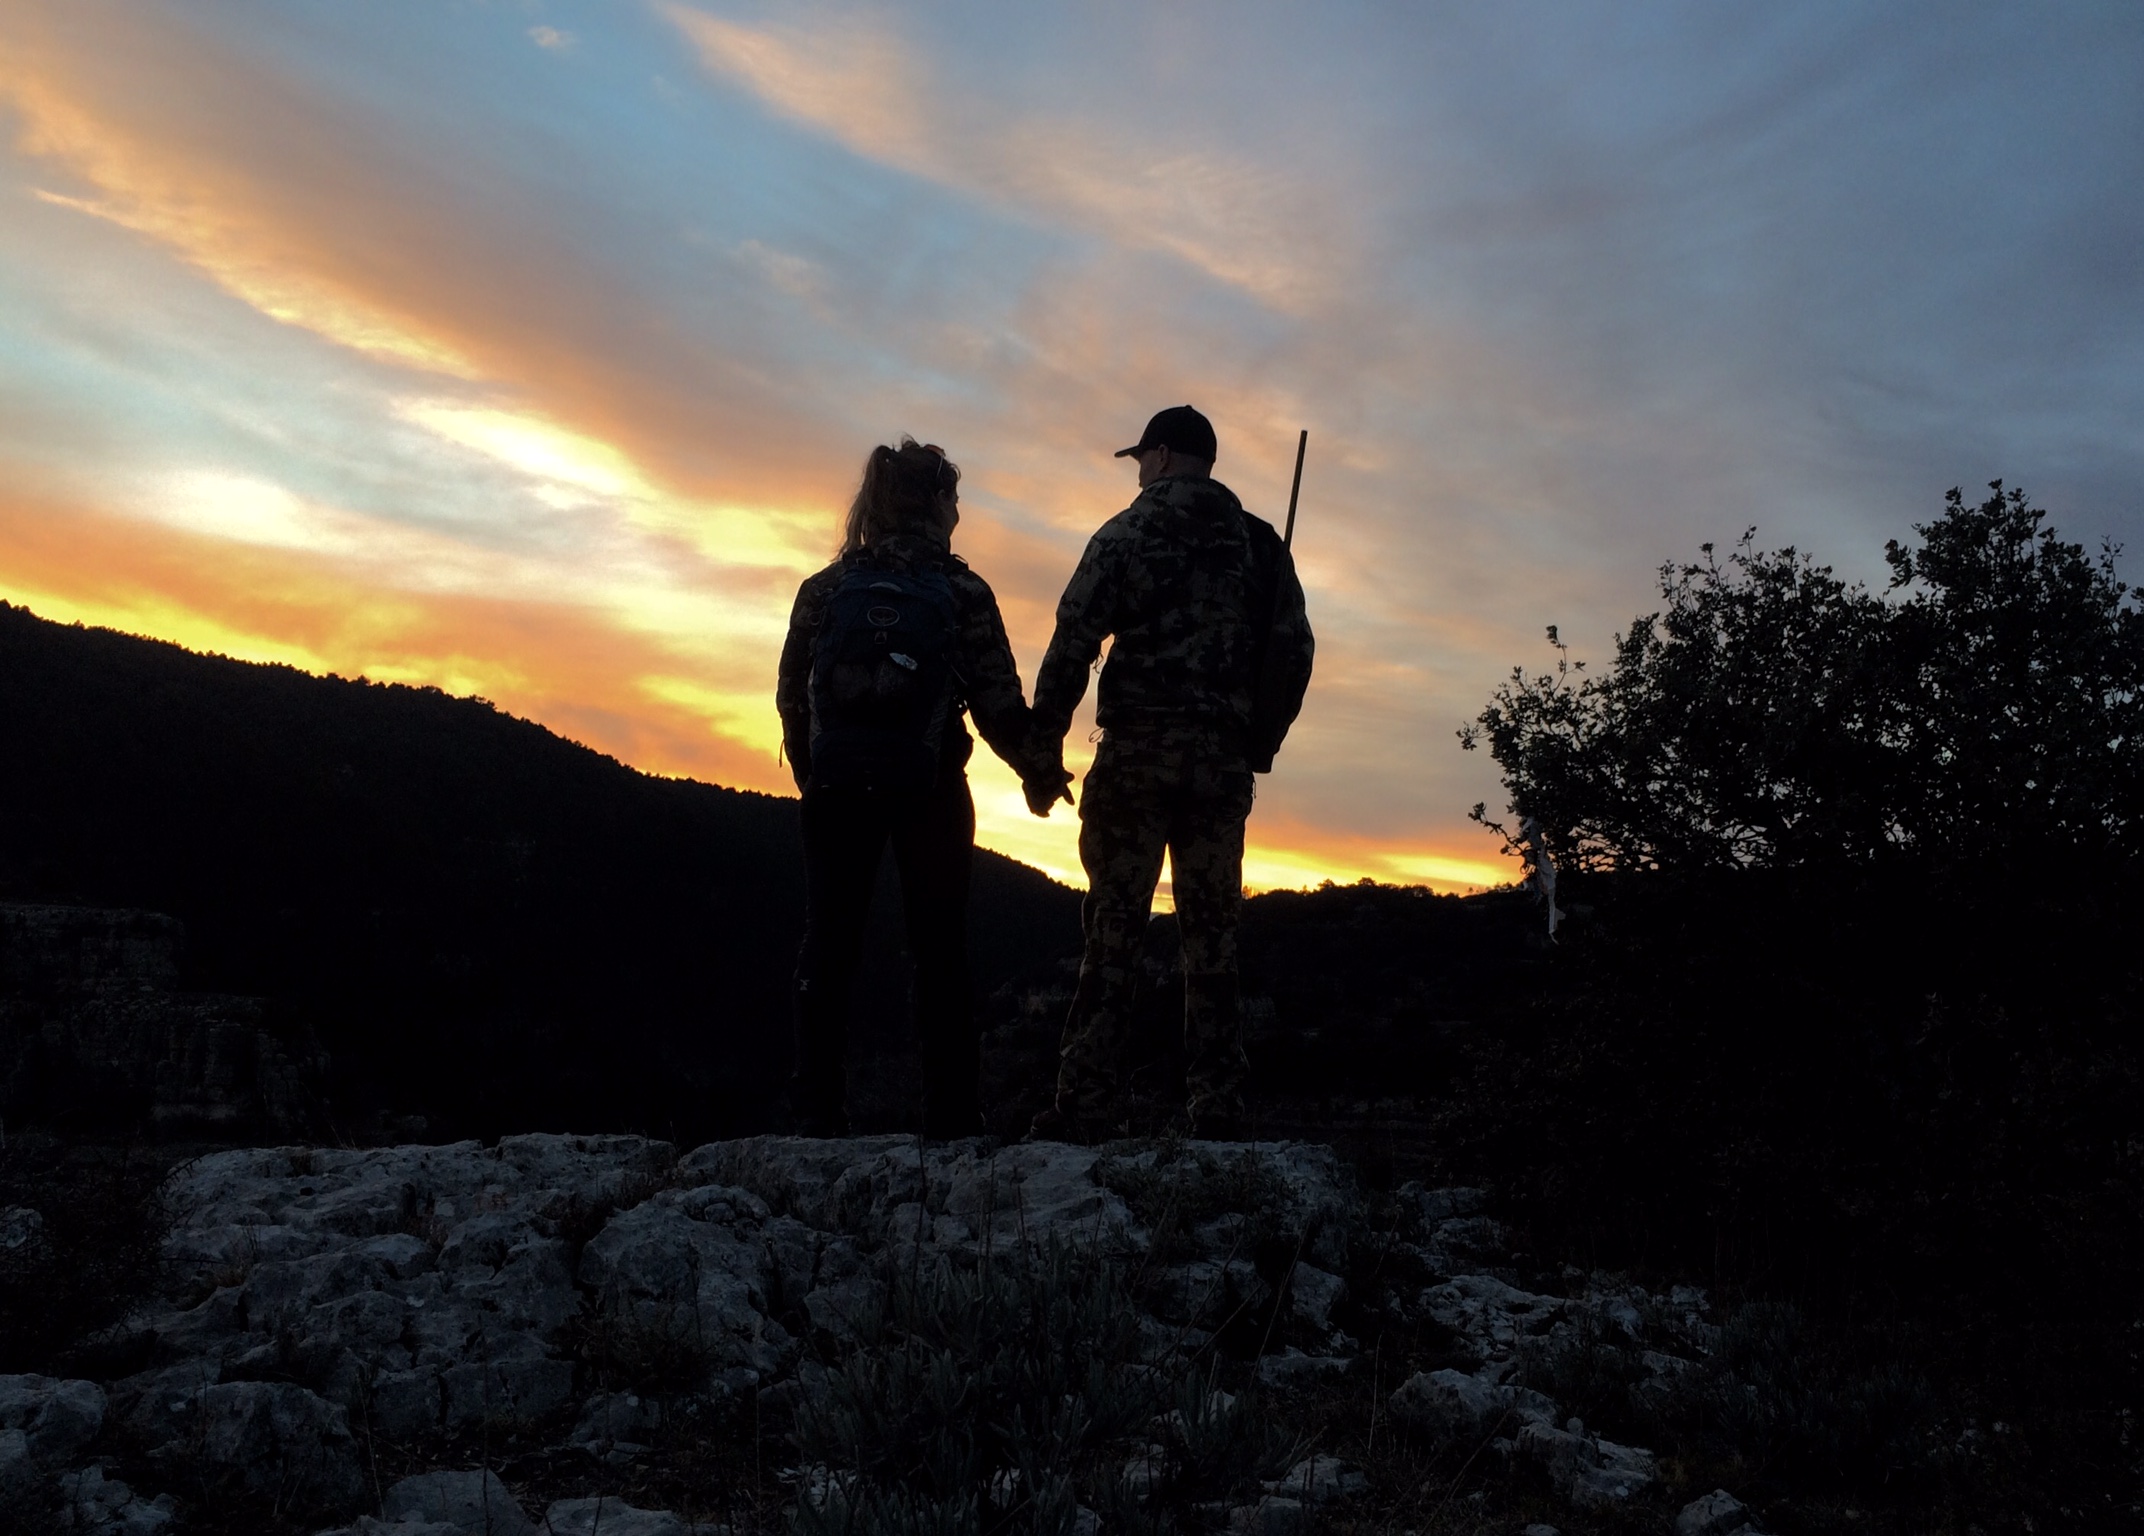 Lov na slikama i videu - Page 2 Kyle-and-Heidi-hunting-in-the-sunset